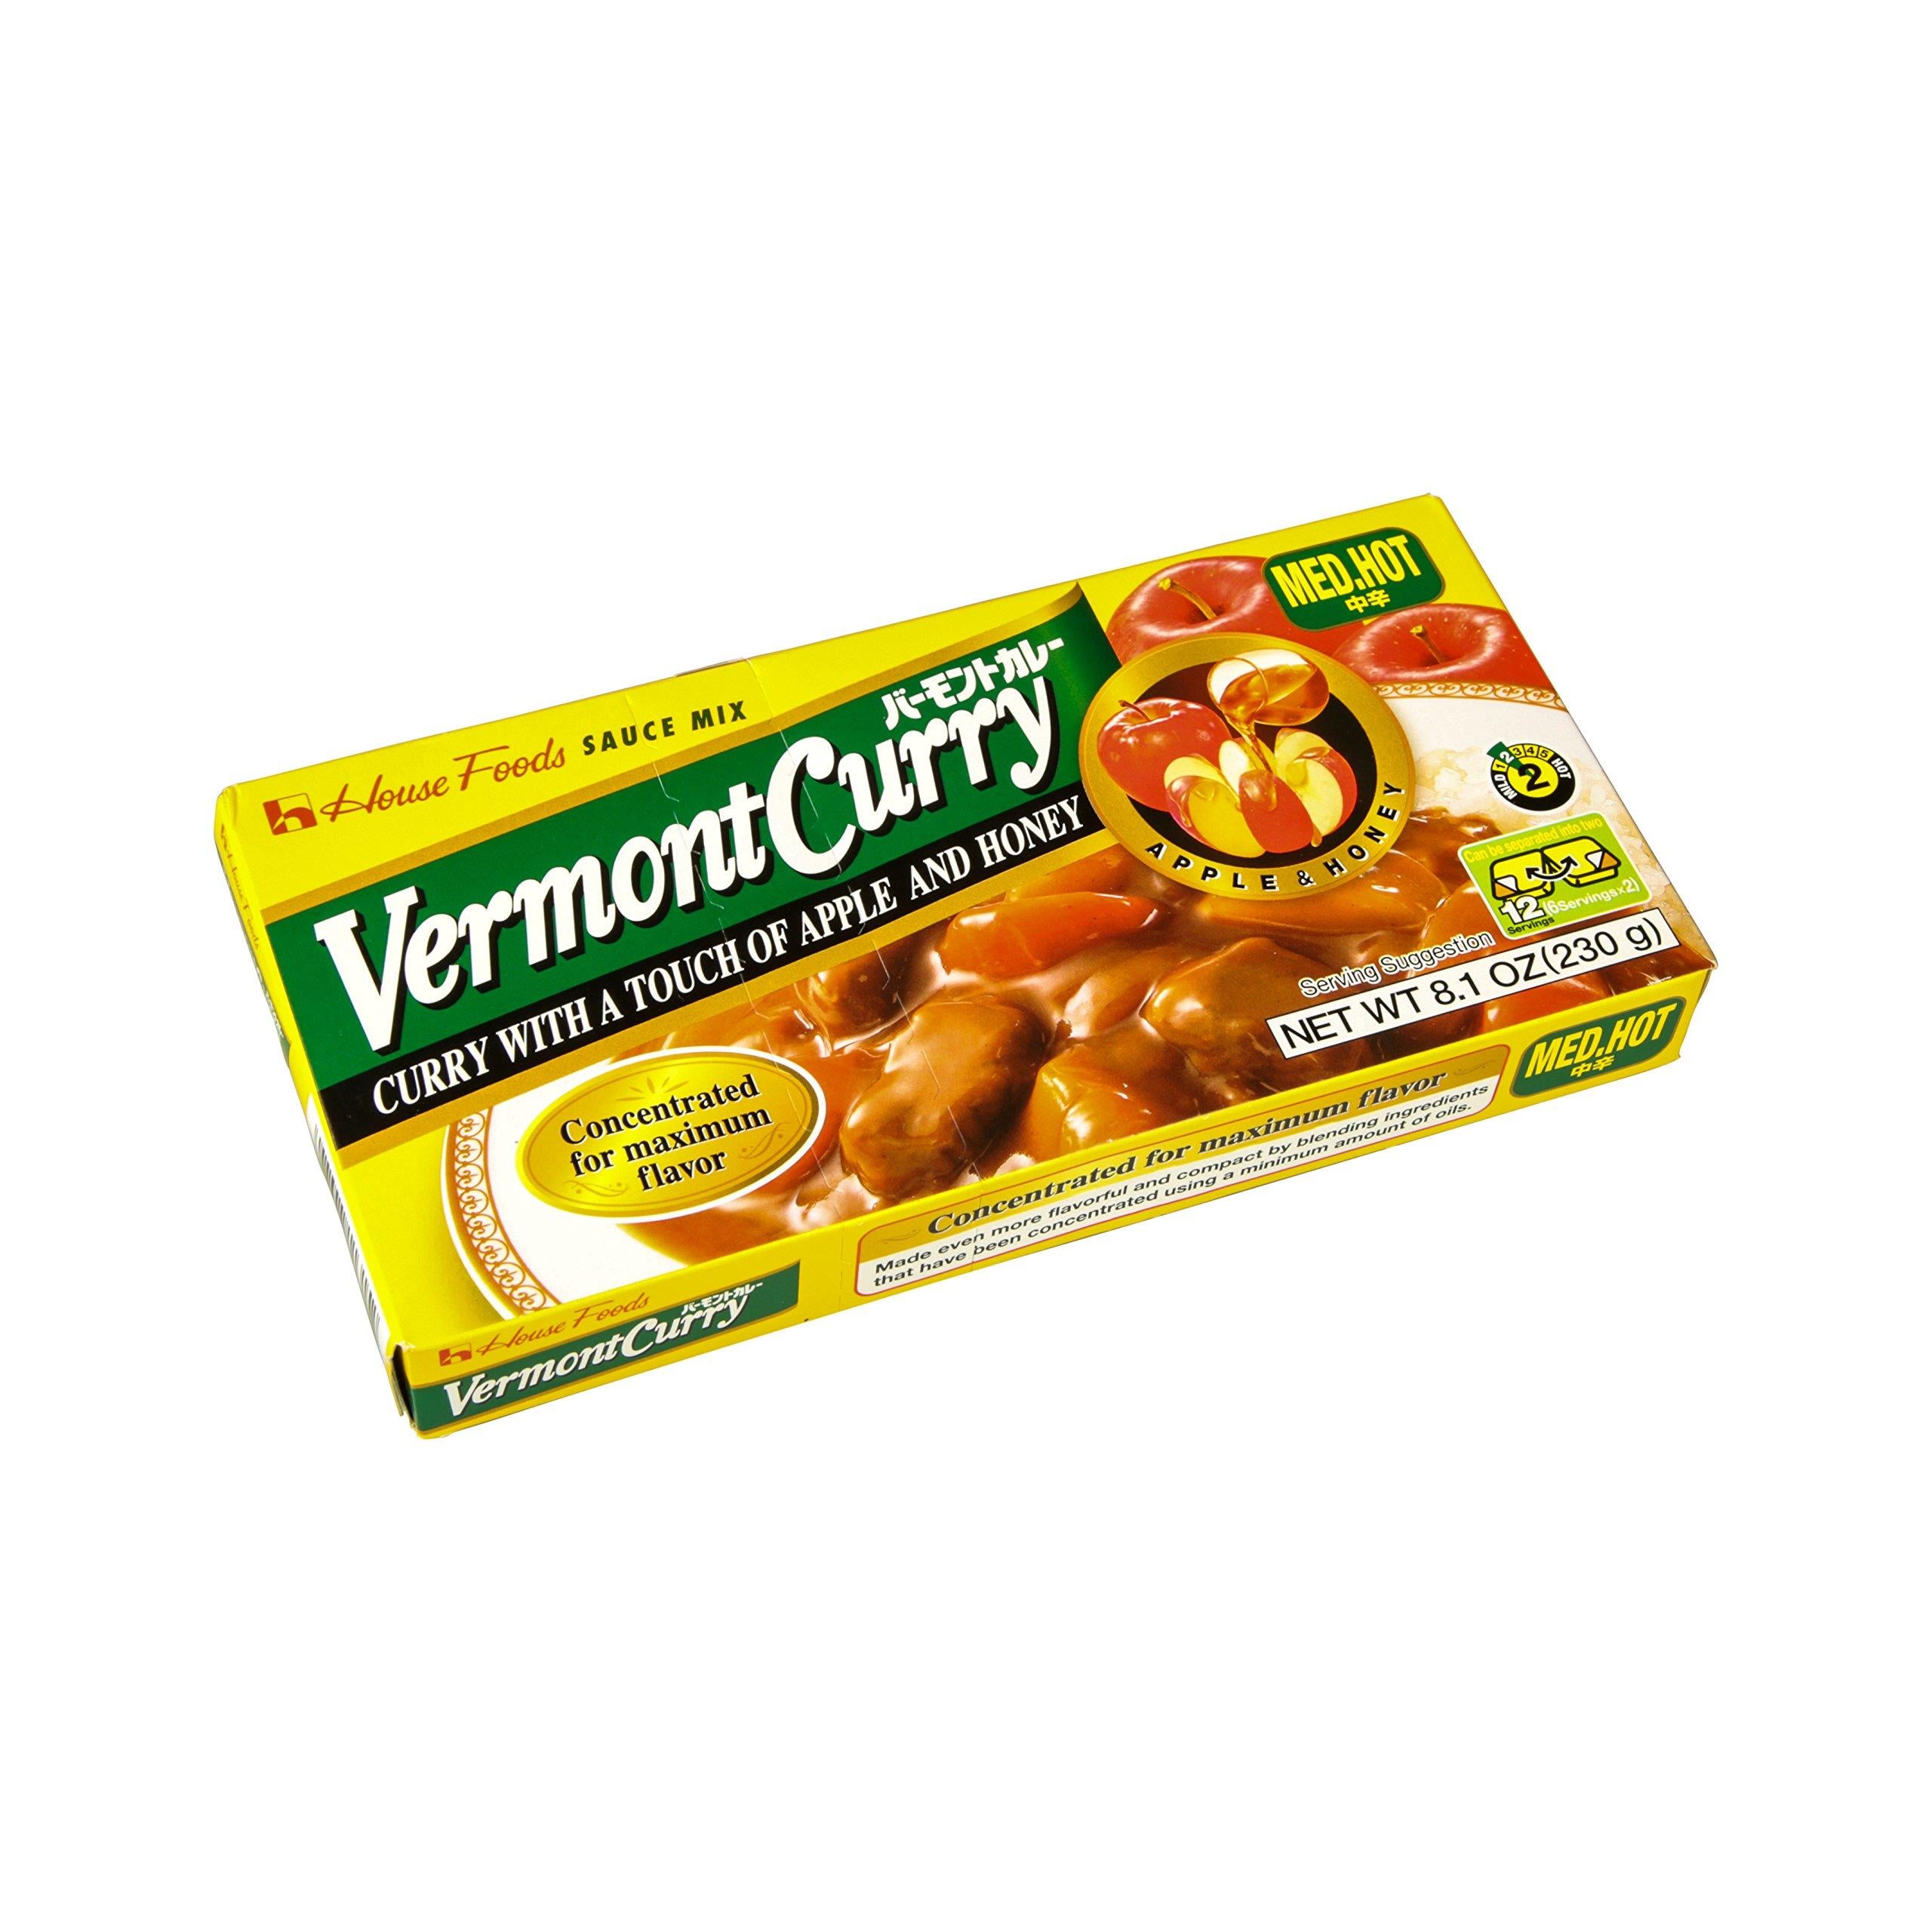 Vermont Curry Medium Hot 8.11 Oz (230g)